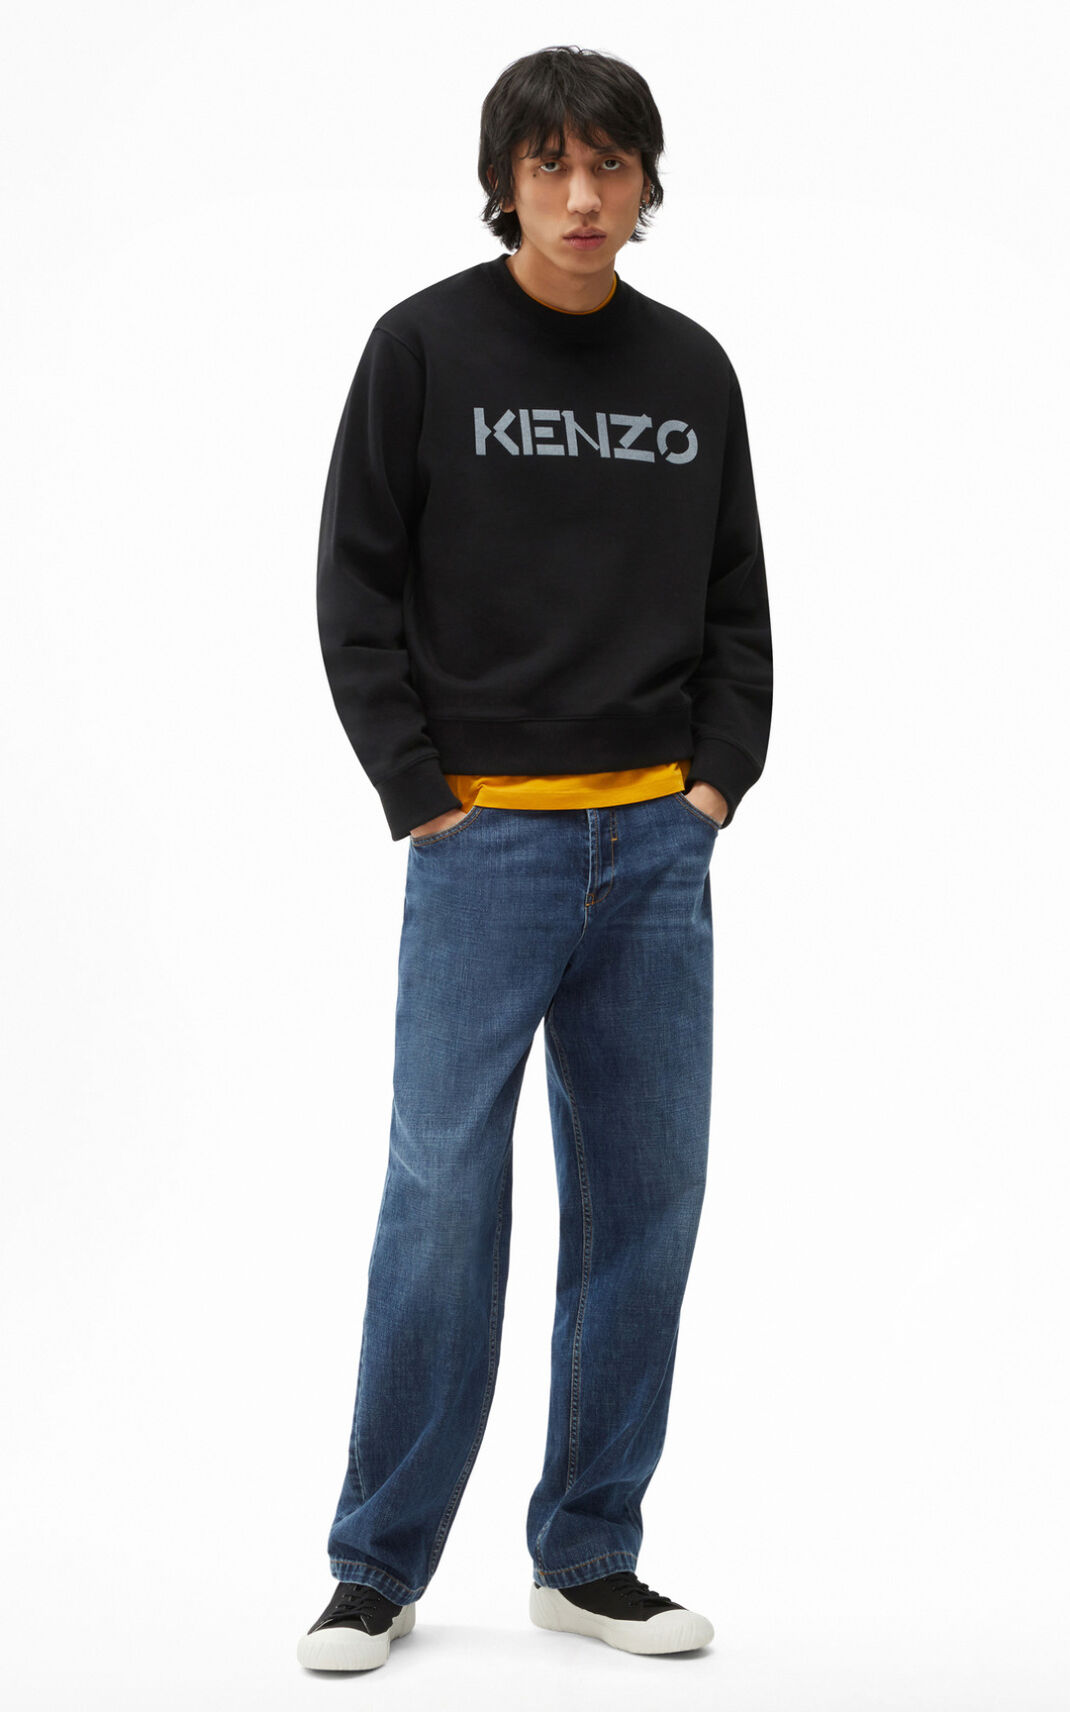 Kenzo Logo スウェット メンズ 黒 - LZDAES257